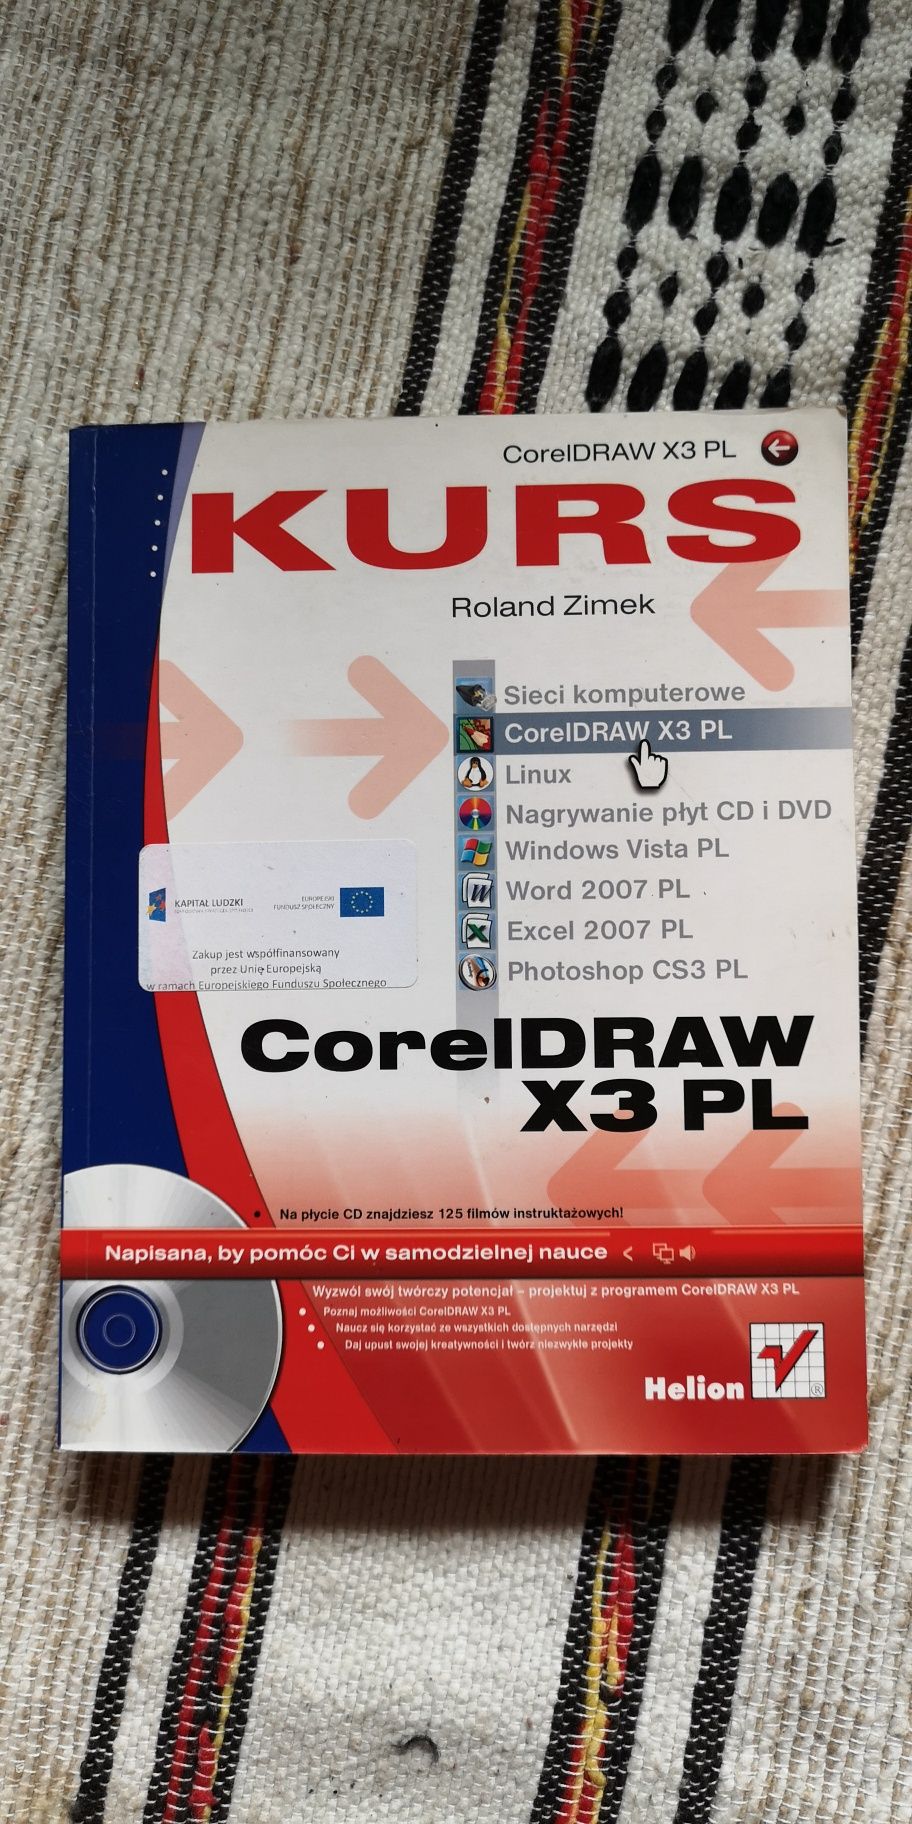 CorelDRAW X3 PL Kurs Roland Zimek